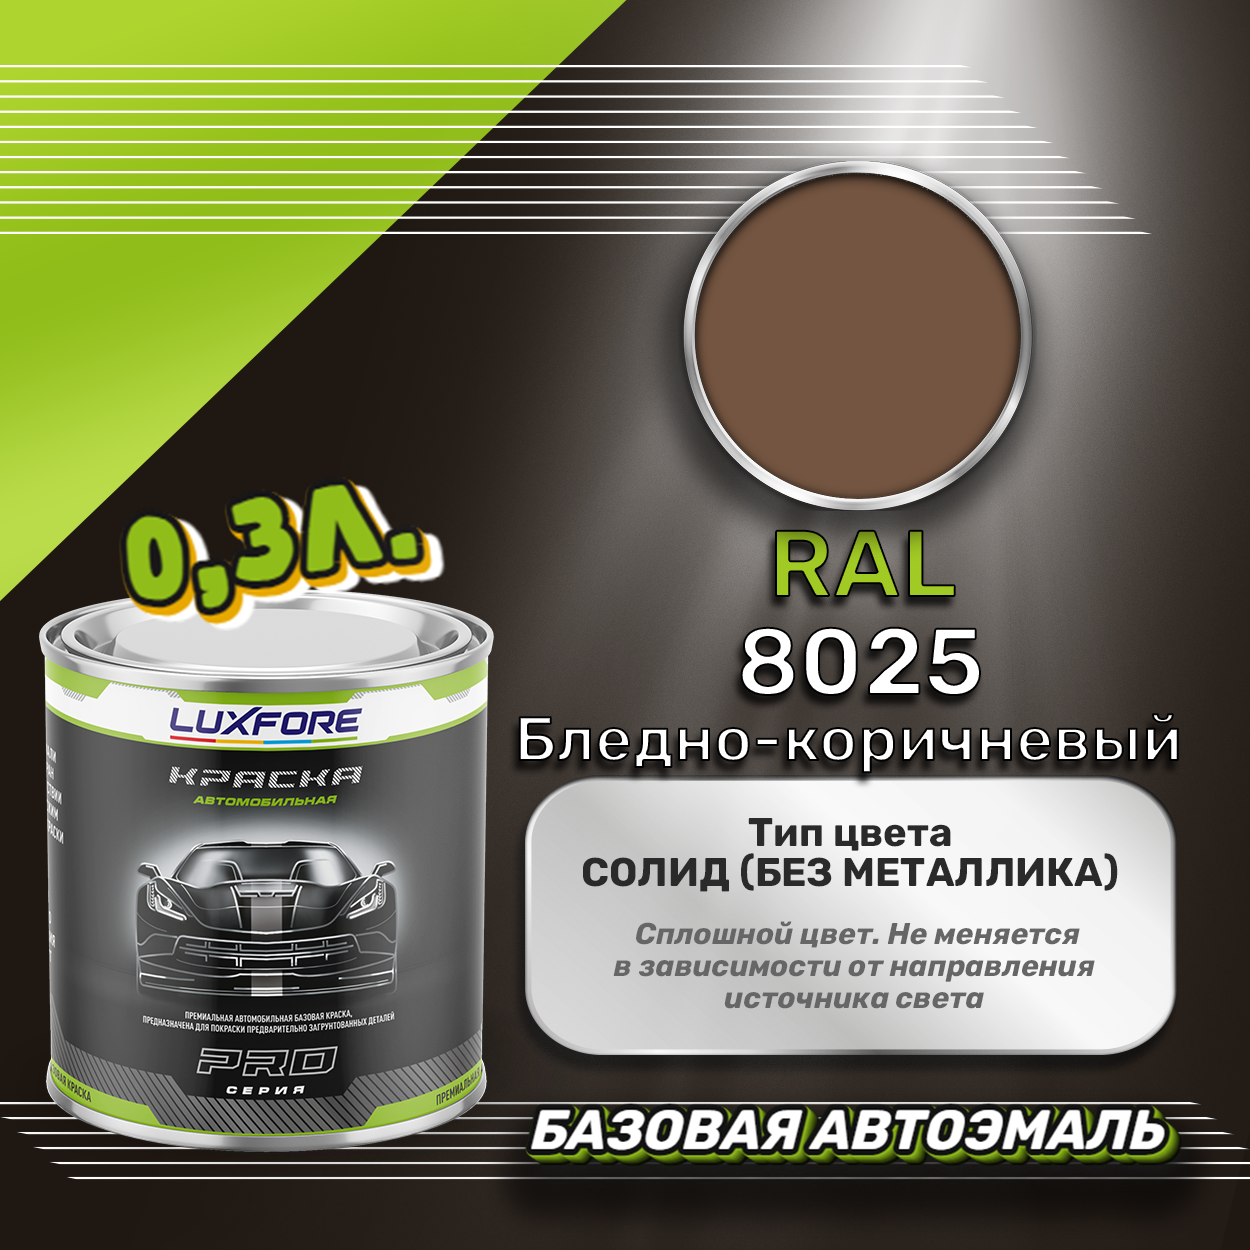 Luxfore краска базовая эмаль RAL 8025 Бледно-коричневый 300 мл